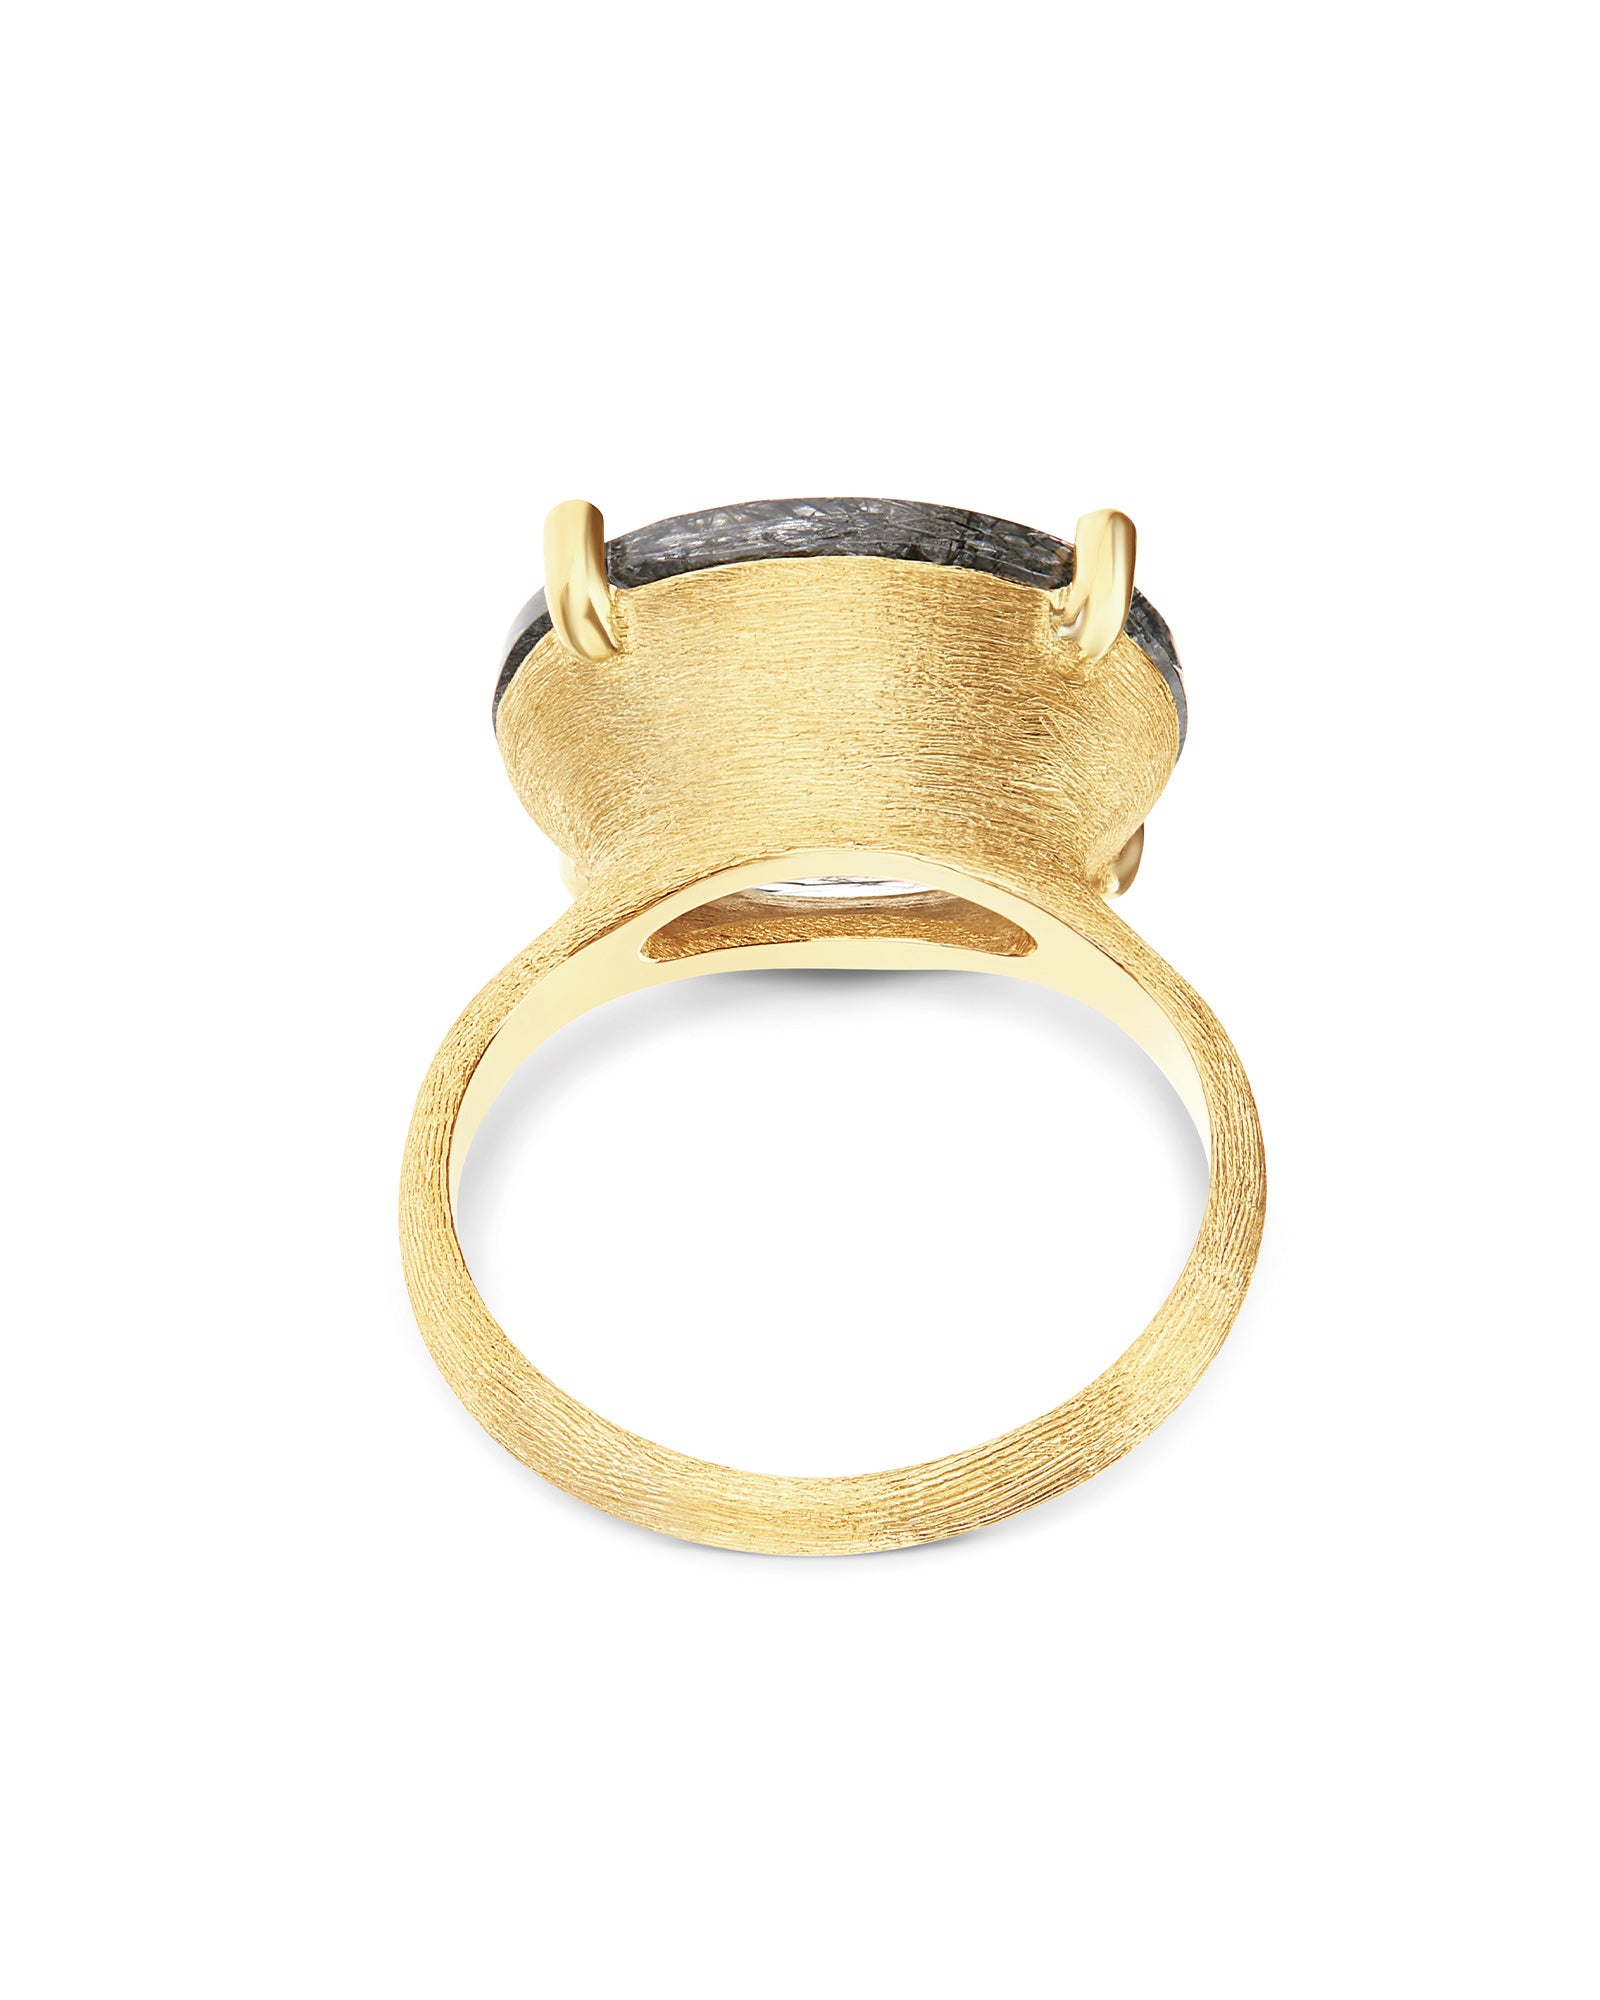 "Ipanema" Grey rutilated quartz, diamonds and 18kt gold big ring